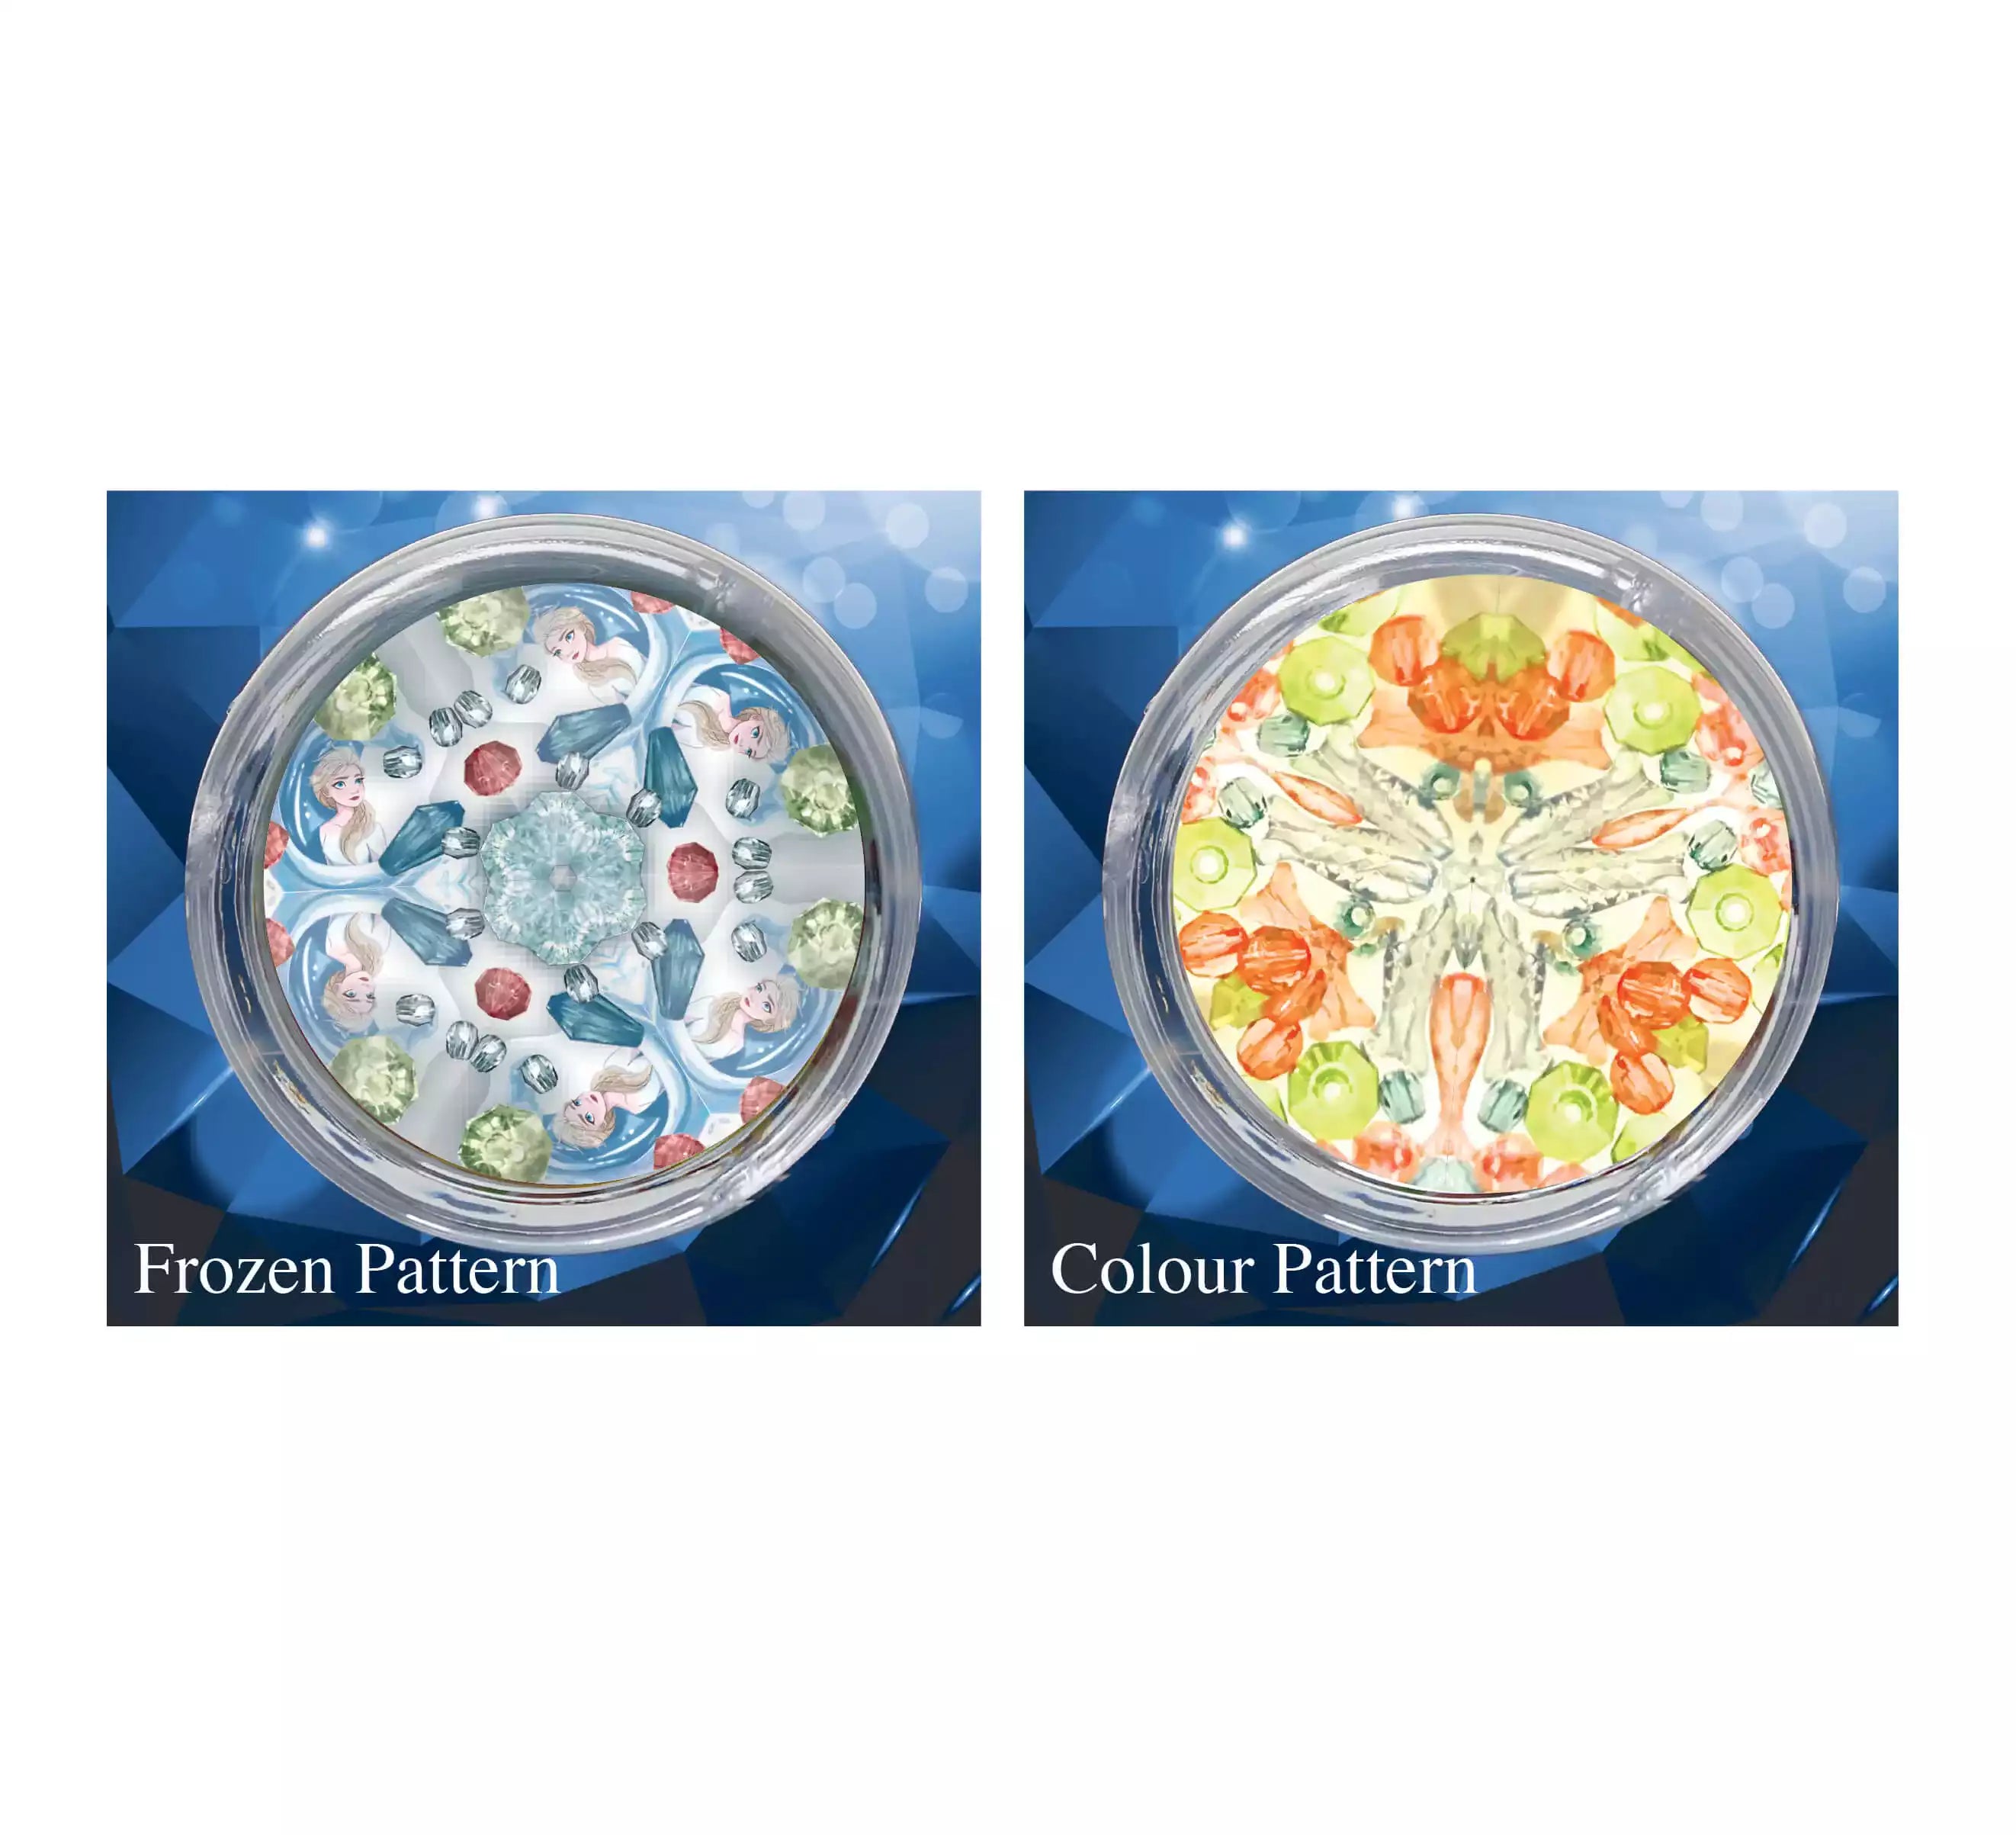 disney toys for children - creative craft set at The Toy Room - Frozen 2 kaleidoscope craft set